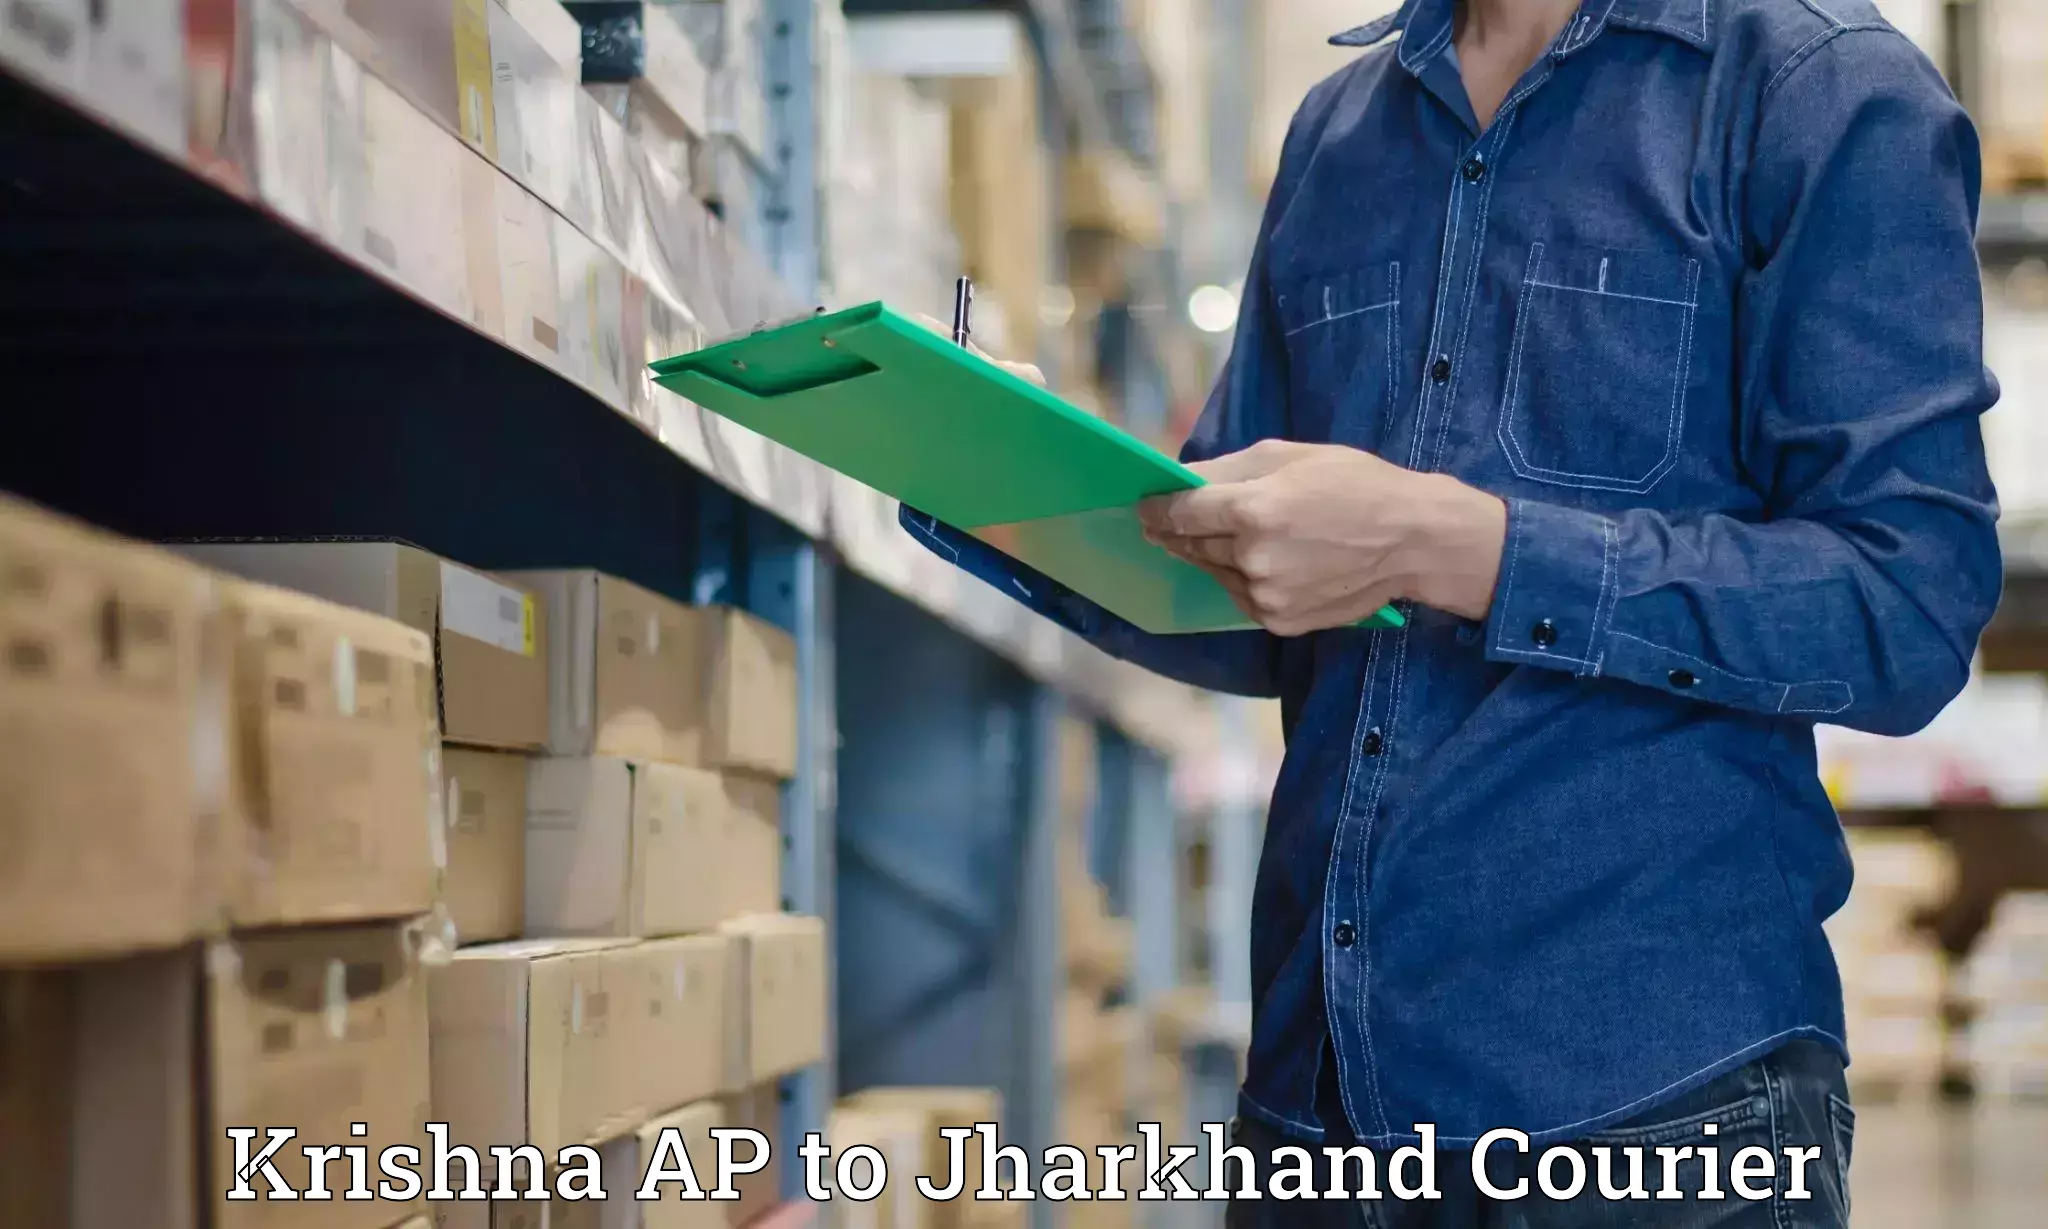 Courier service innovation Krishna AP to Seraikela Kharsawan